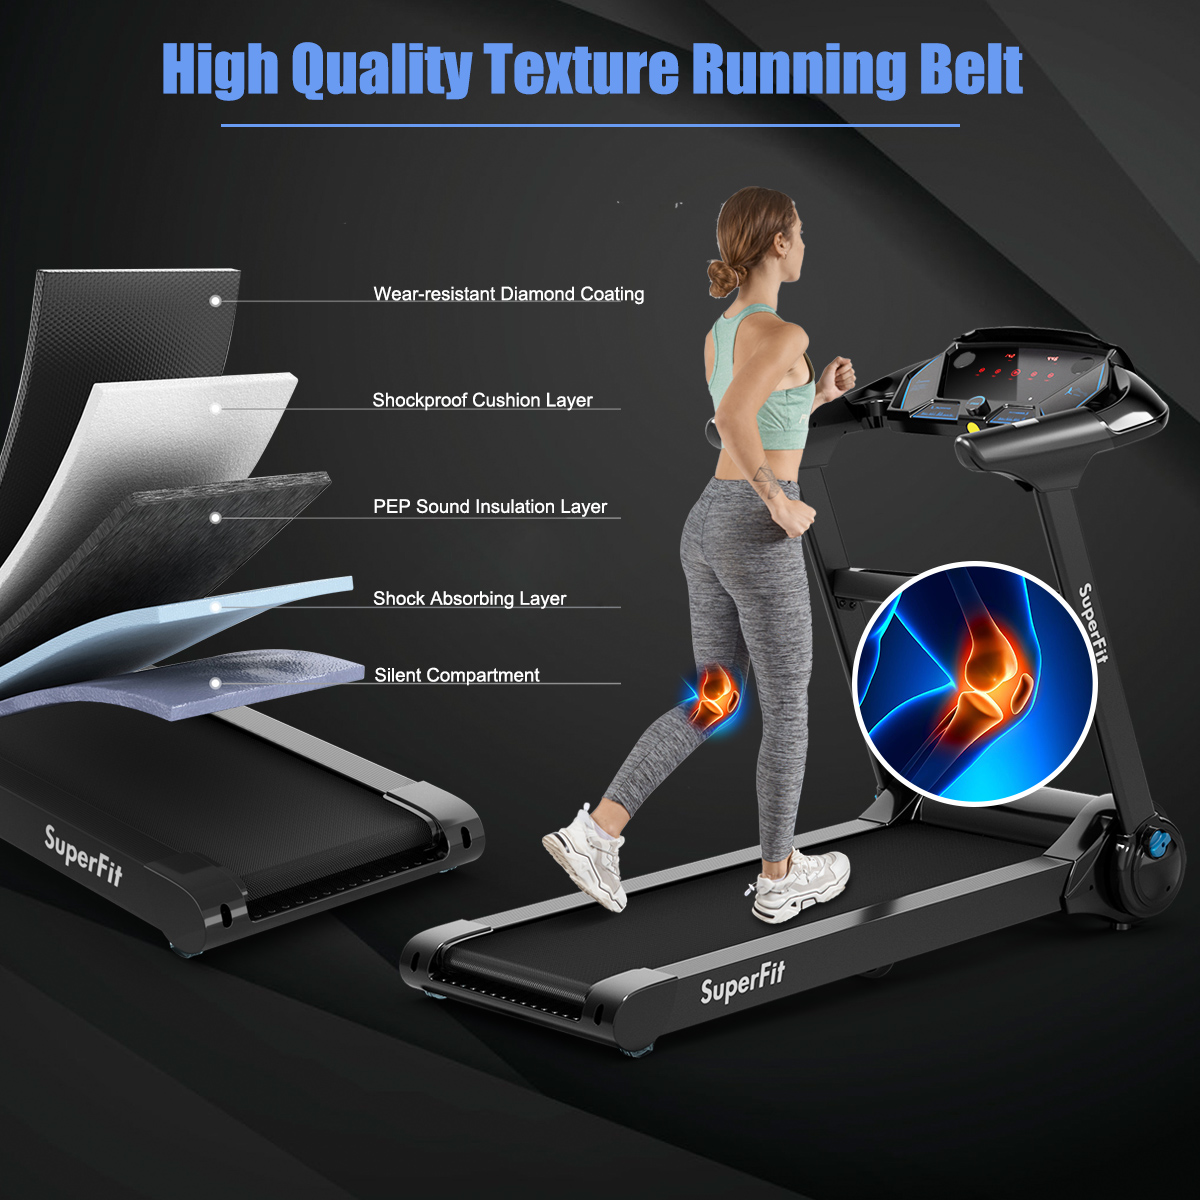 Goplus 2.25HP Folding Treadmill Running Machine LED Touch Display - image 2 of 10